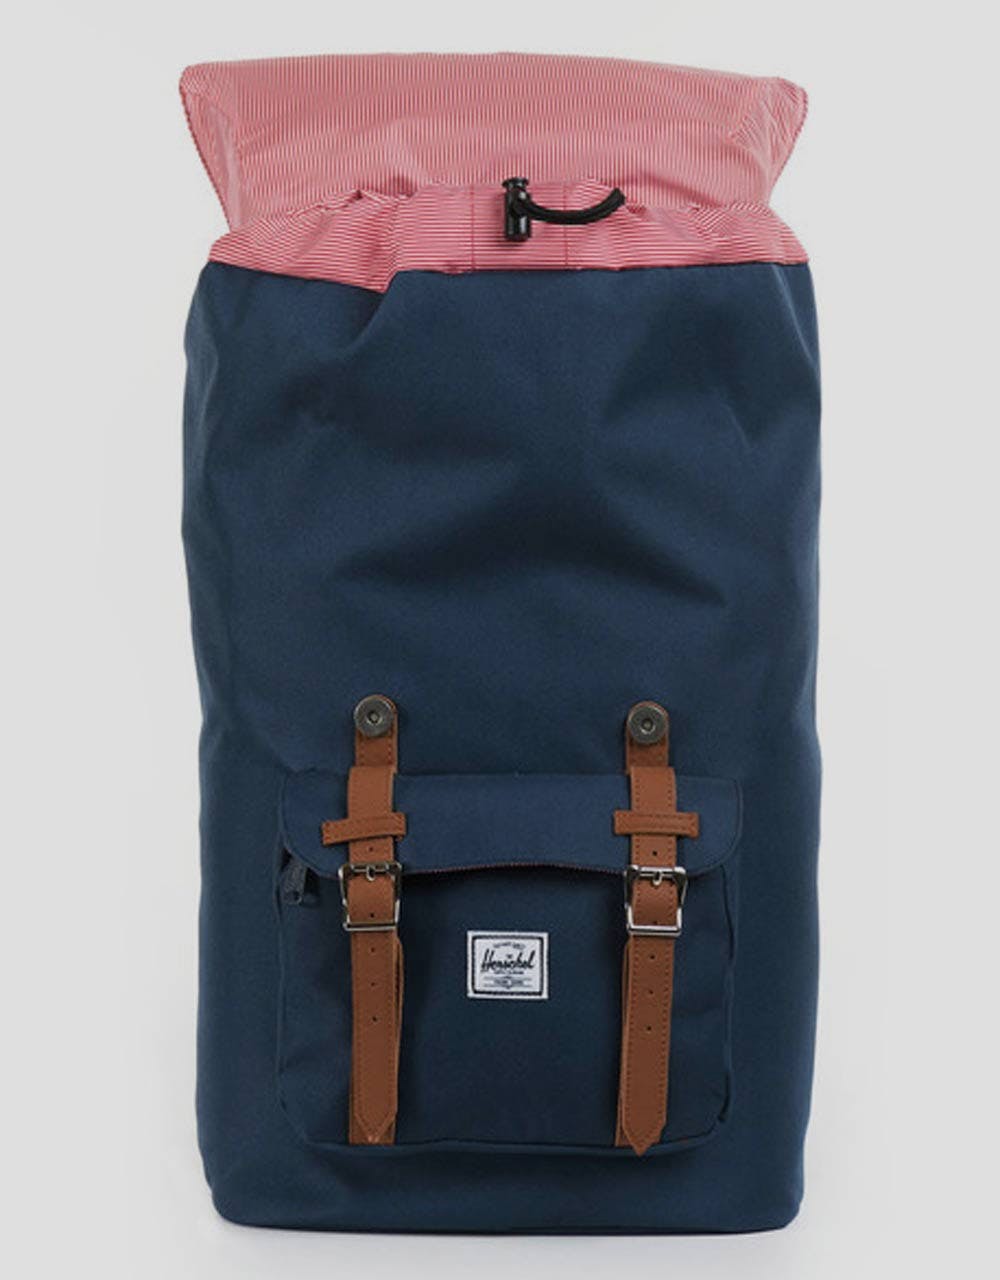 Herschel Supply Co. Little America Backpack - Navy/Tan